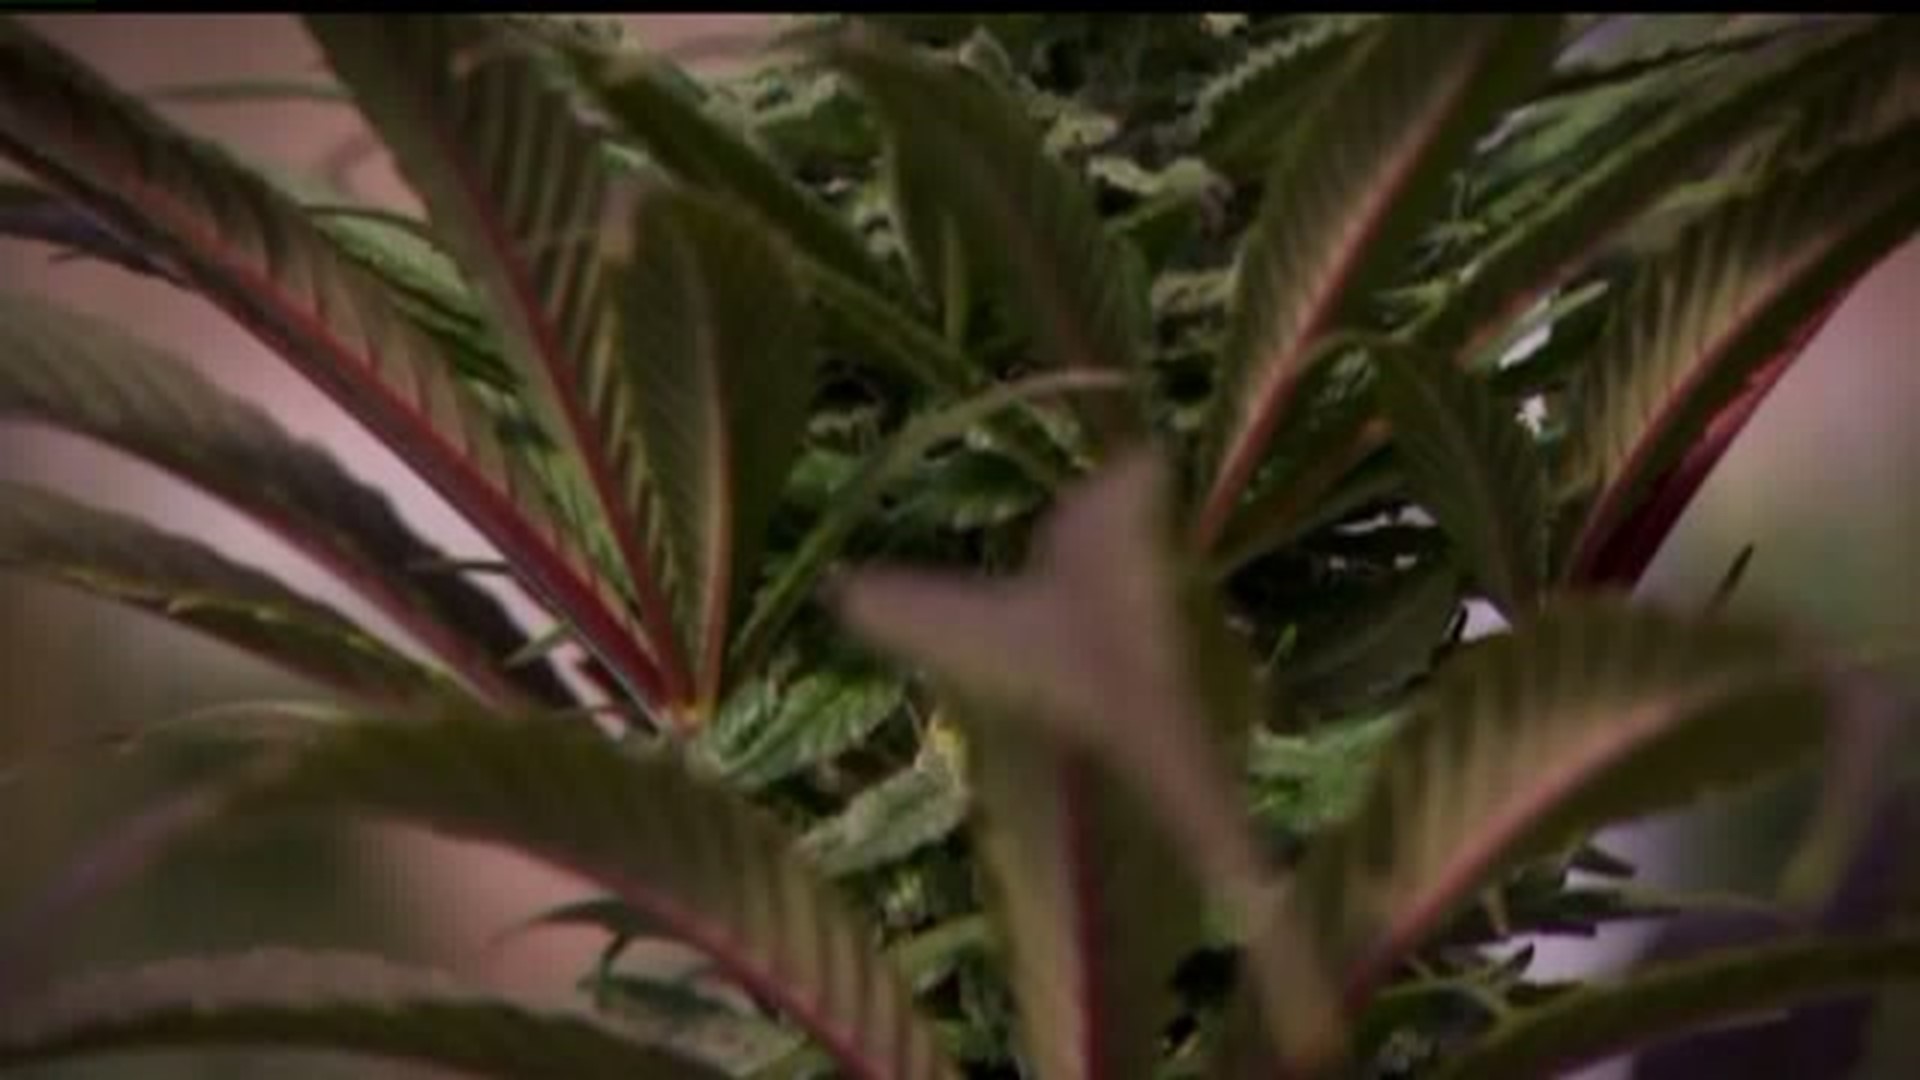 Harrisburg takes public feedback on lowering marijuana possession penalties